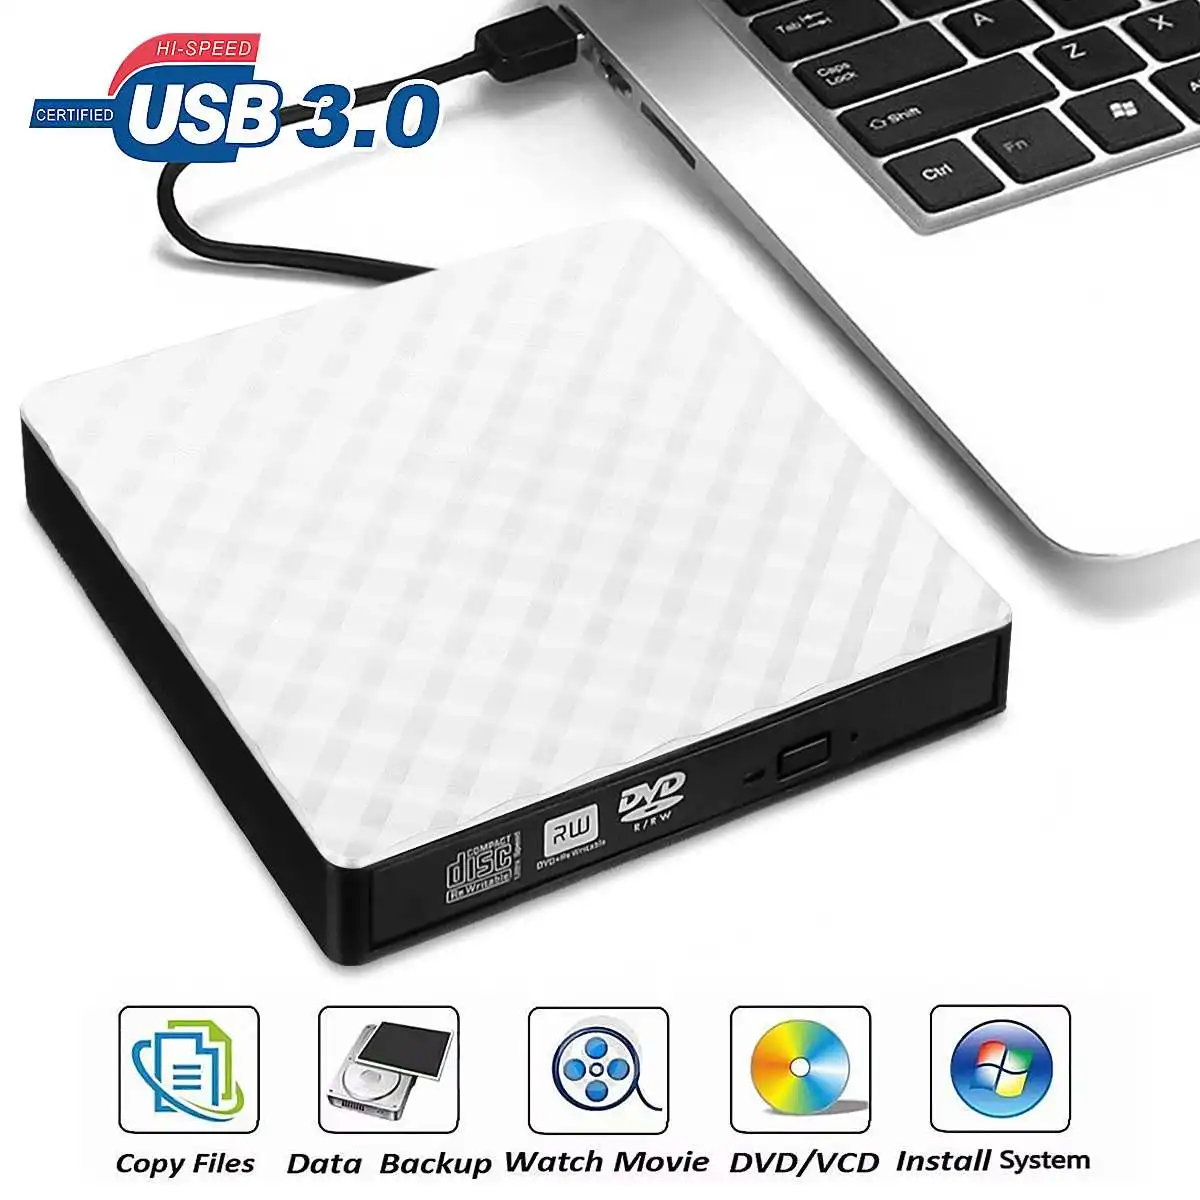 USB 3.0 External Optical Drive DVD Combo DVD ROM Player CD-RW Burner Writer Plug and Play For Macbook Laptop Desktop PC